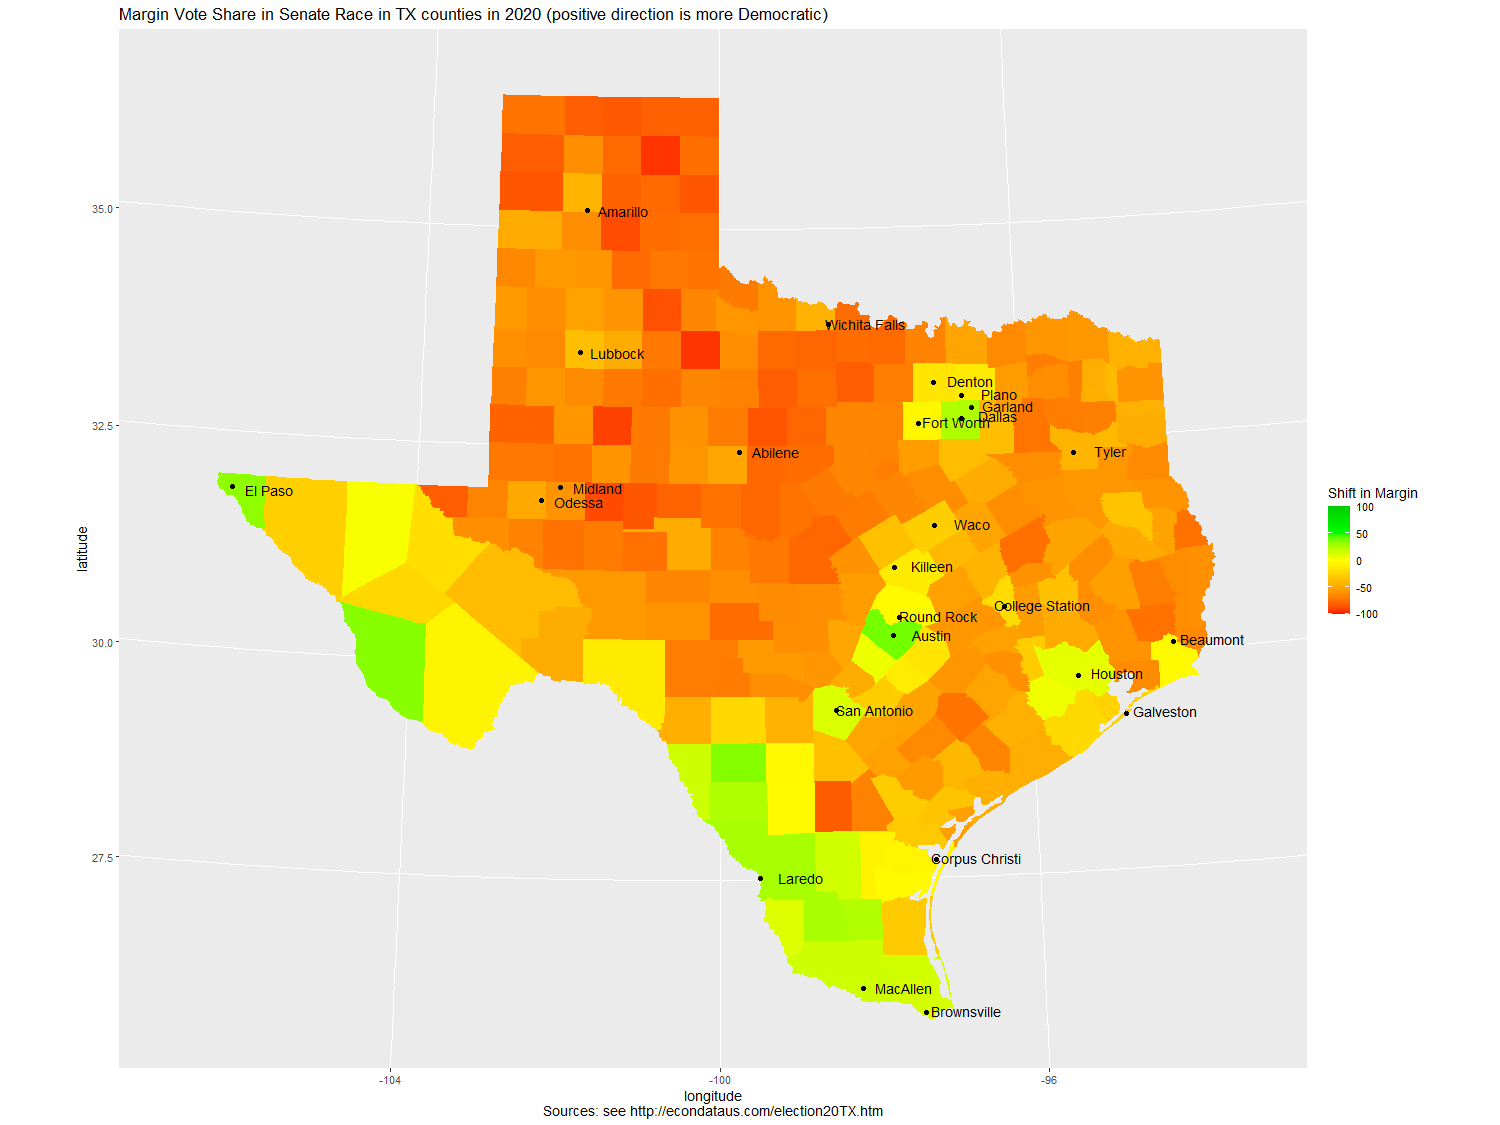 Map of Vote Share in Senate Race in TX counties in 2020 - Margin